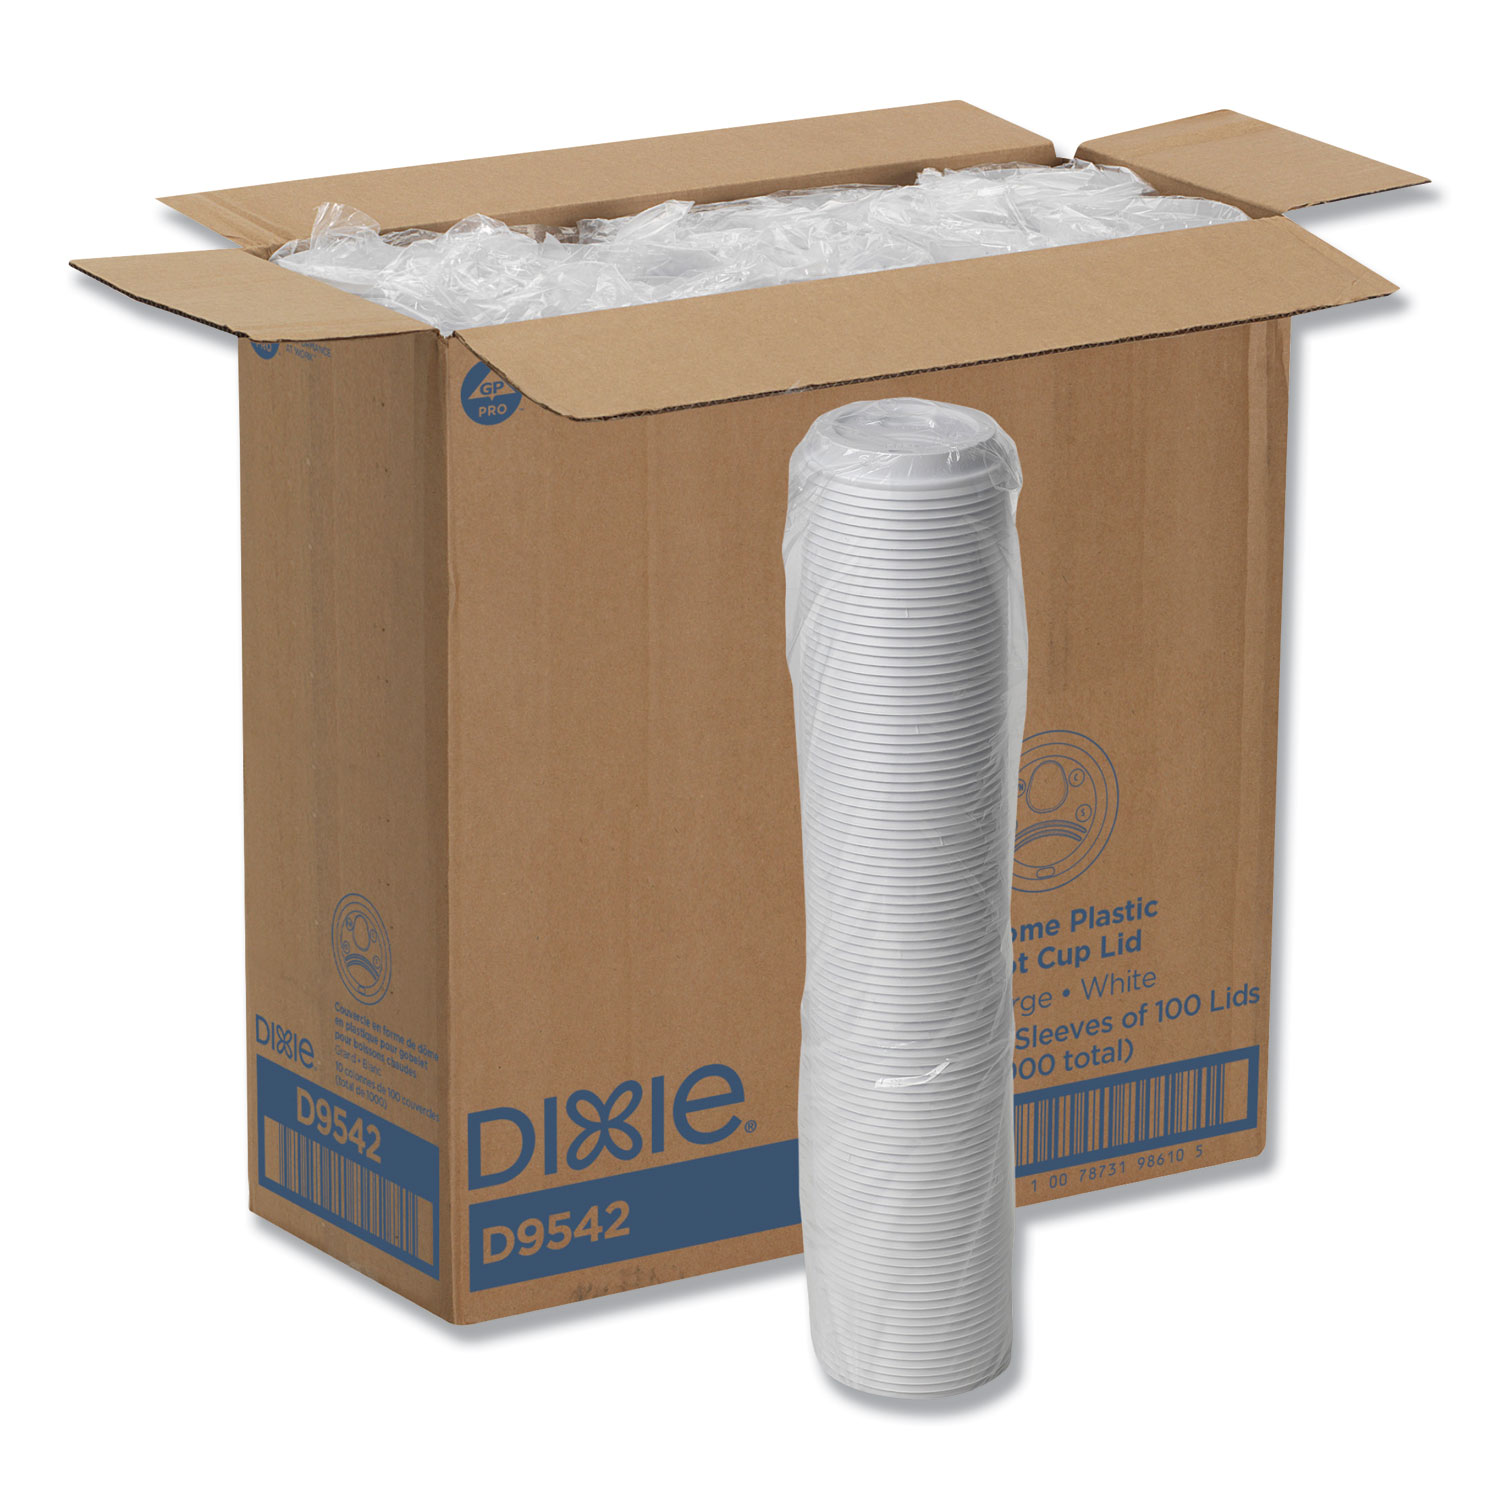  Dixie TP9542 Reclosable Lids for 12 and 16 oz Hot Cups, White, 100 Lids/Pack, 10 Packs/Carton (DXETP9542) 